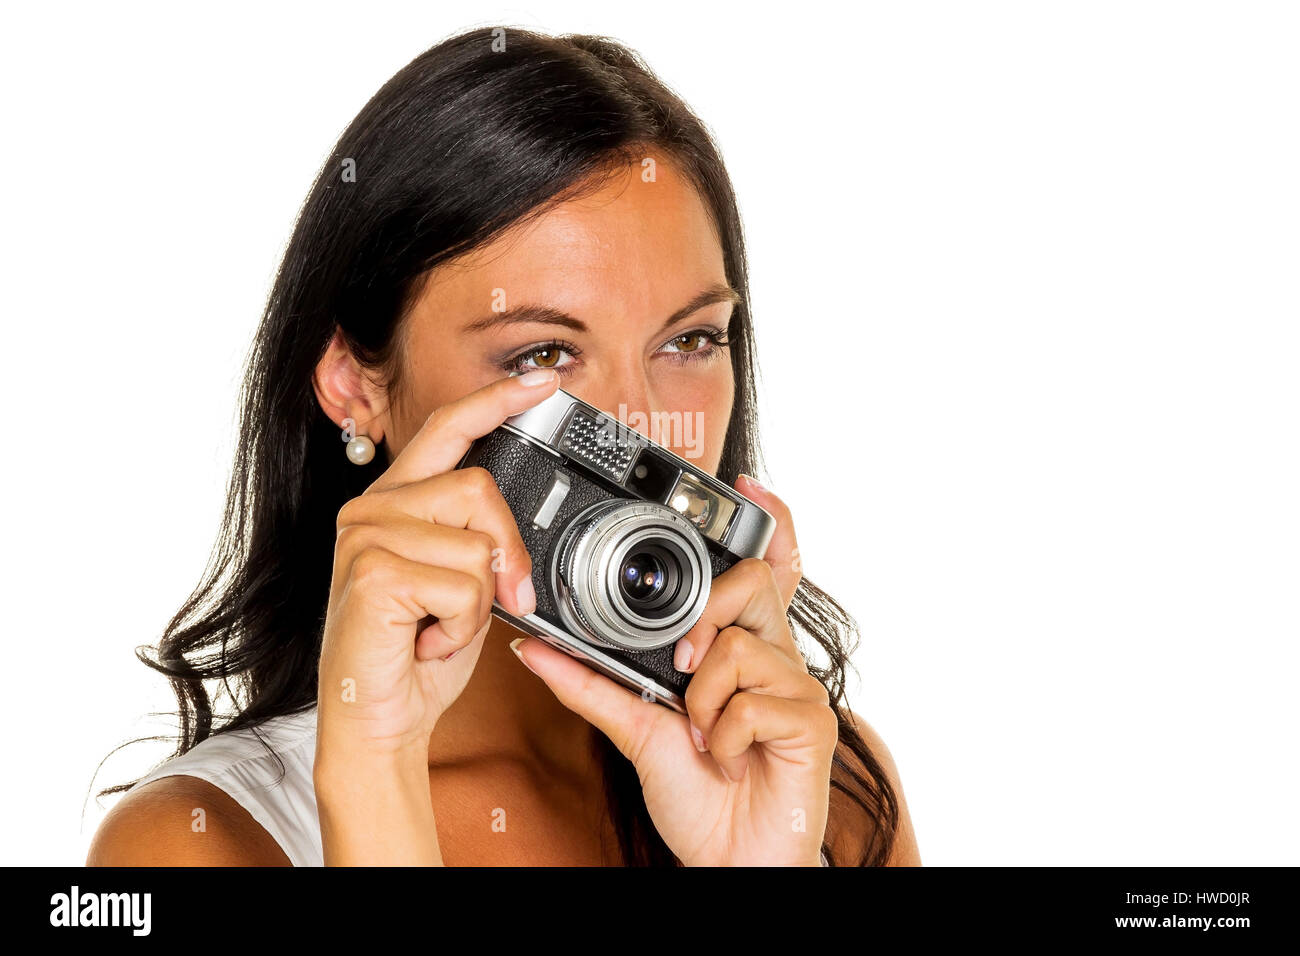 Una giovane donna prende la foto di una fotocamera con un retrò, Eine junge Frau fotografiert mit einer retrò Kamera Foto Stock